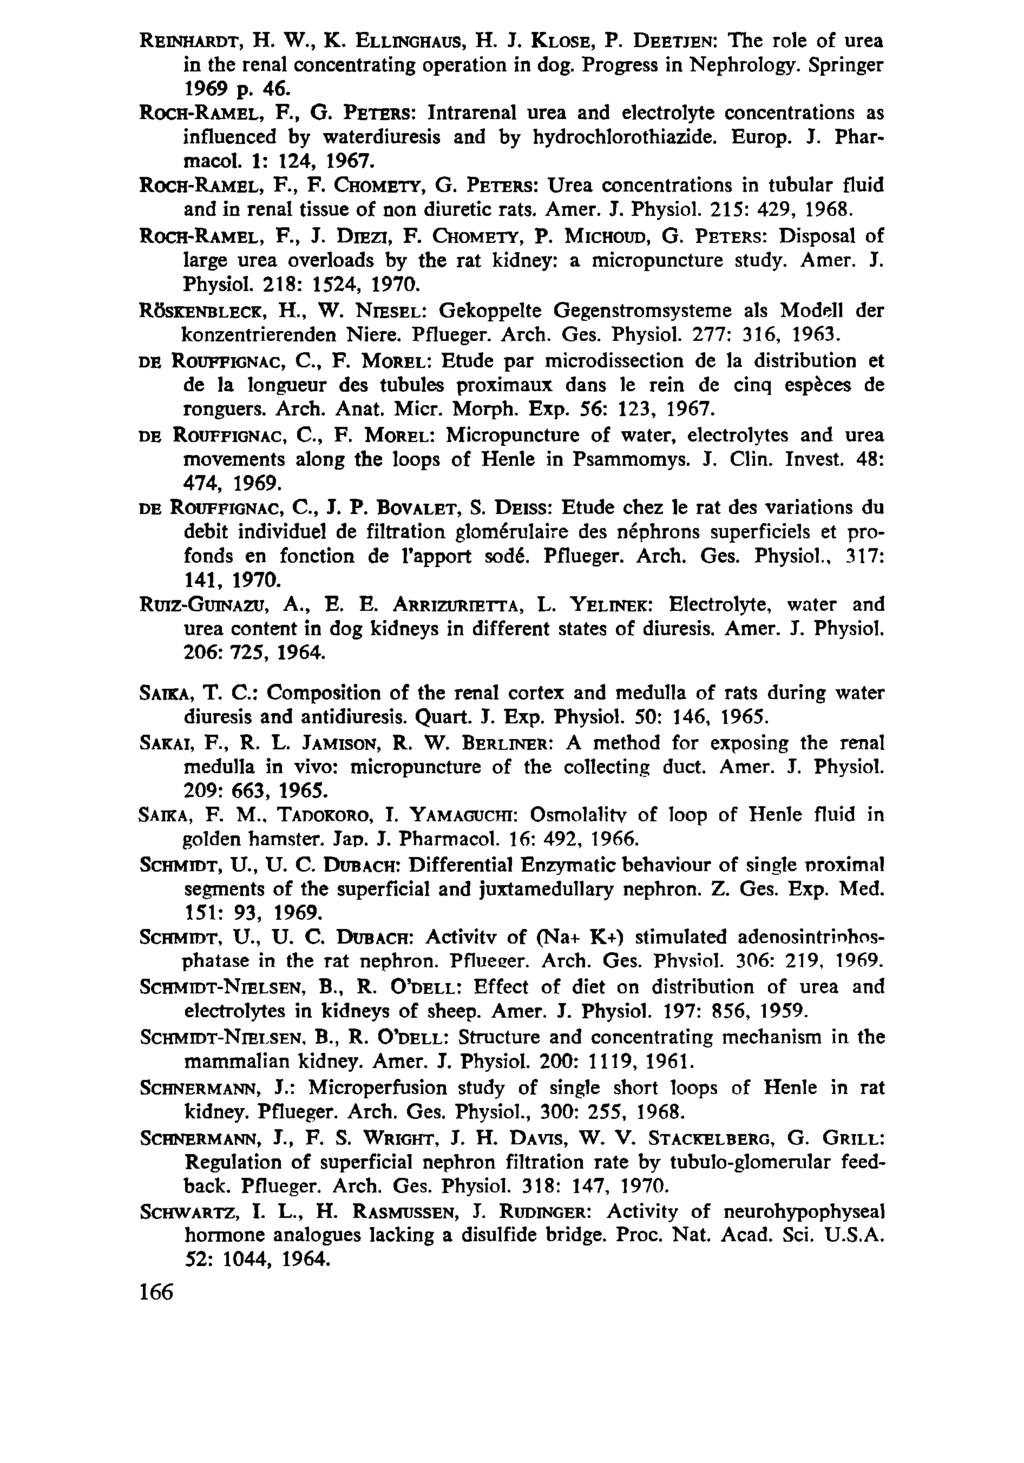 REINHARDT, H. W., К. ELLINGHAUS, H. J. KLOSE, P. DEETJEN: The role of urea in the renal concentrating operation in dog. Progress in Nephrology. Springer 1969 p. 46. ROCH-RAMEL, F., G.